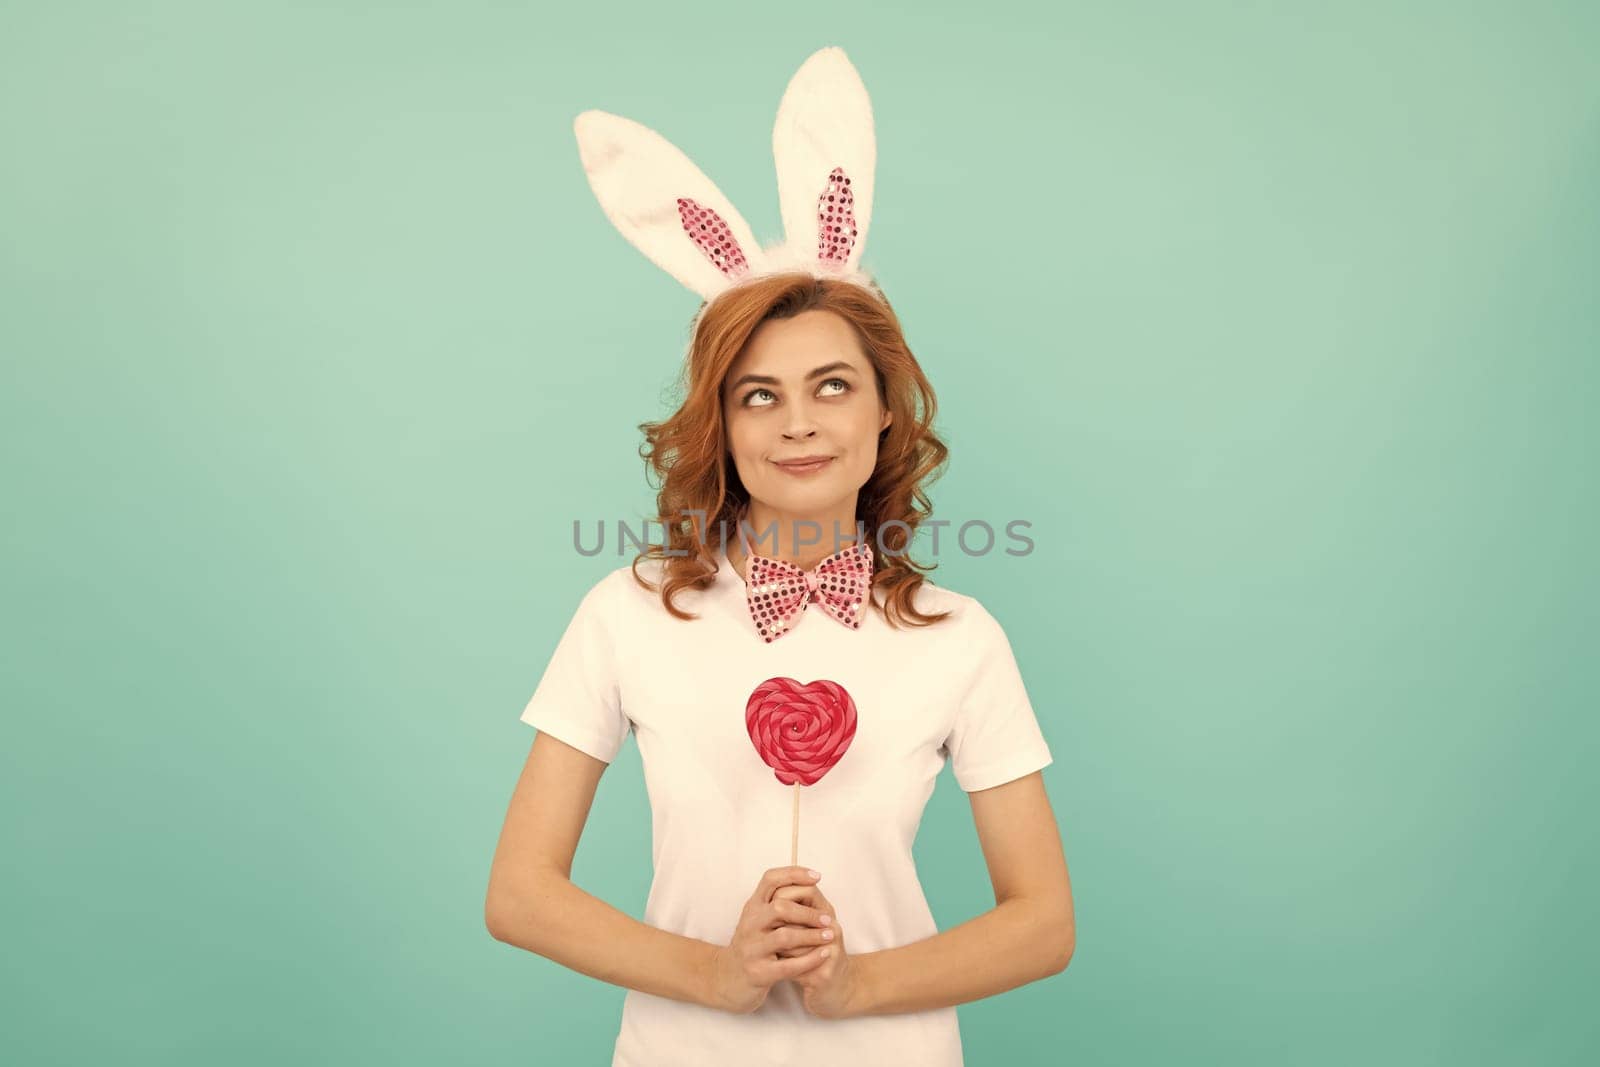 cheerful easter girl wear bunny ears hold heart lollipop.